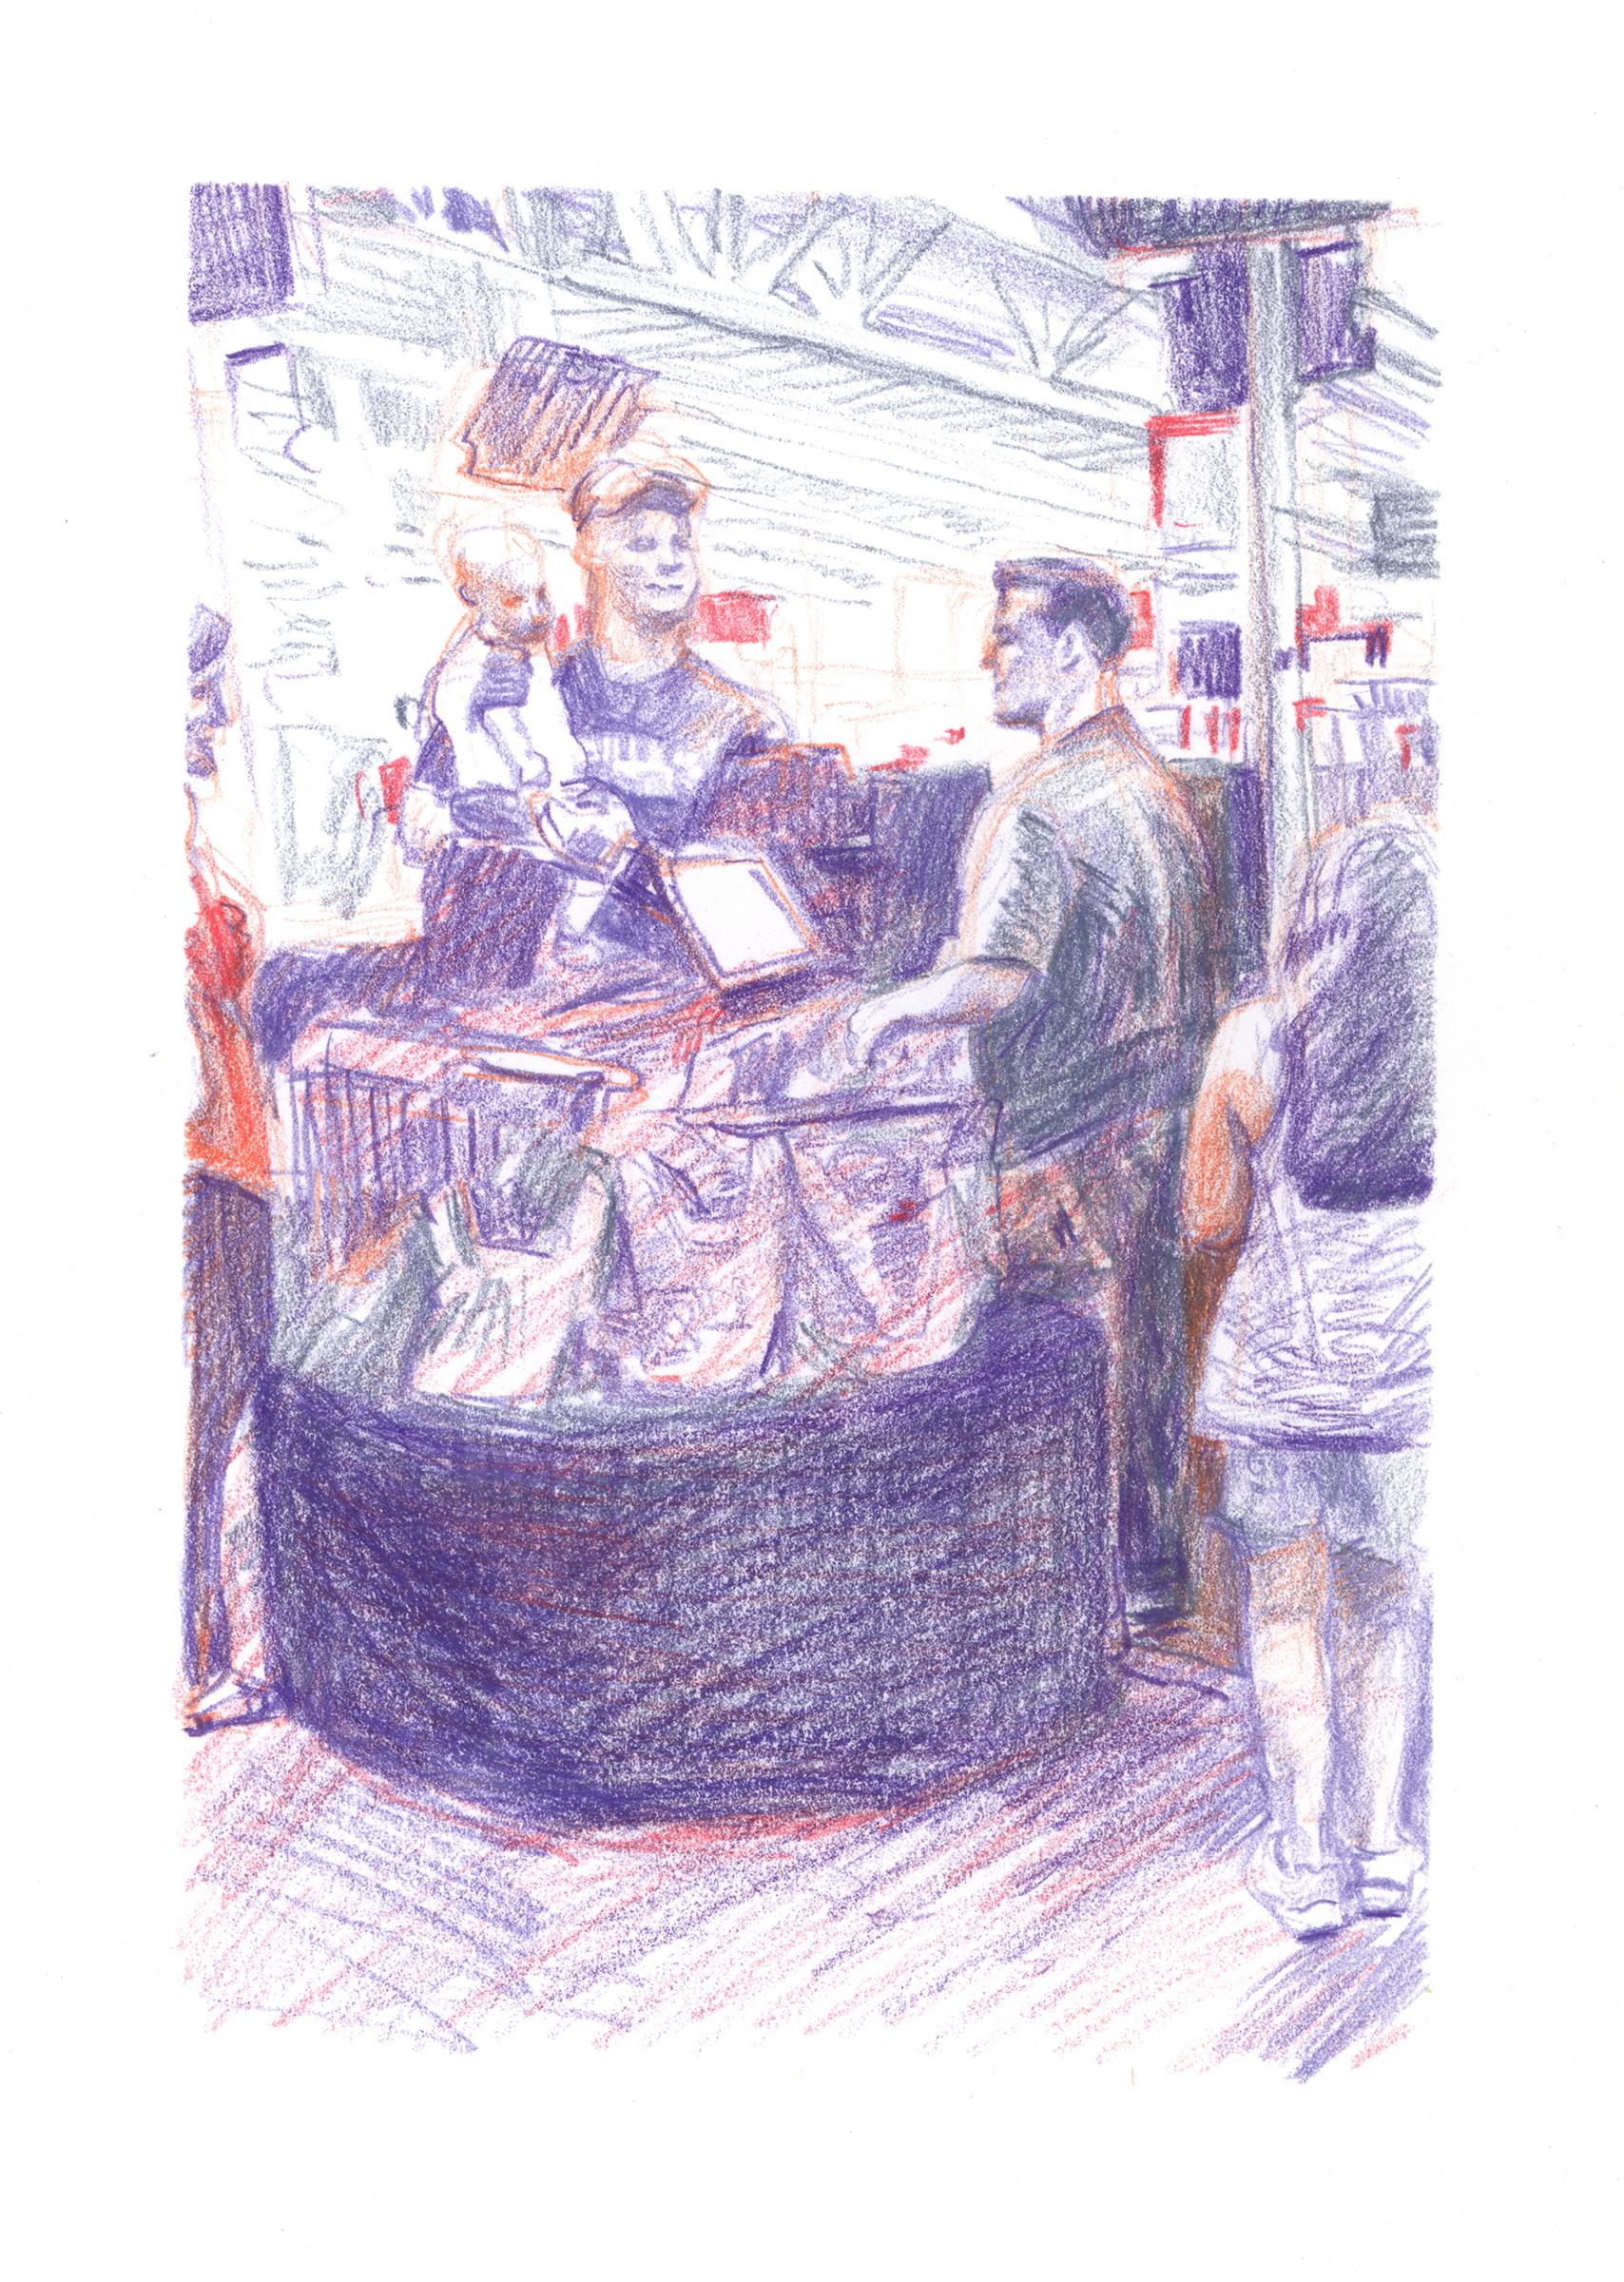 Eilis Crean Figurative Art - "Marketplace Cashier #44" - interior drawing - colorful work on paper - Daumier